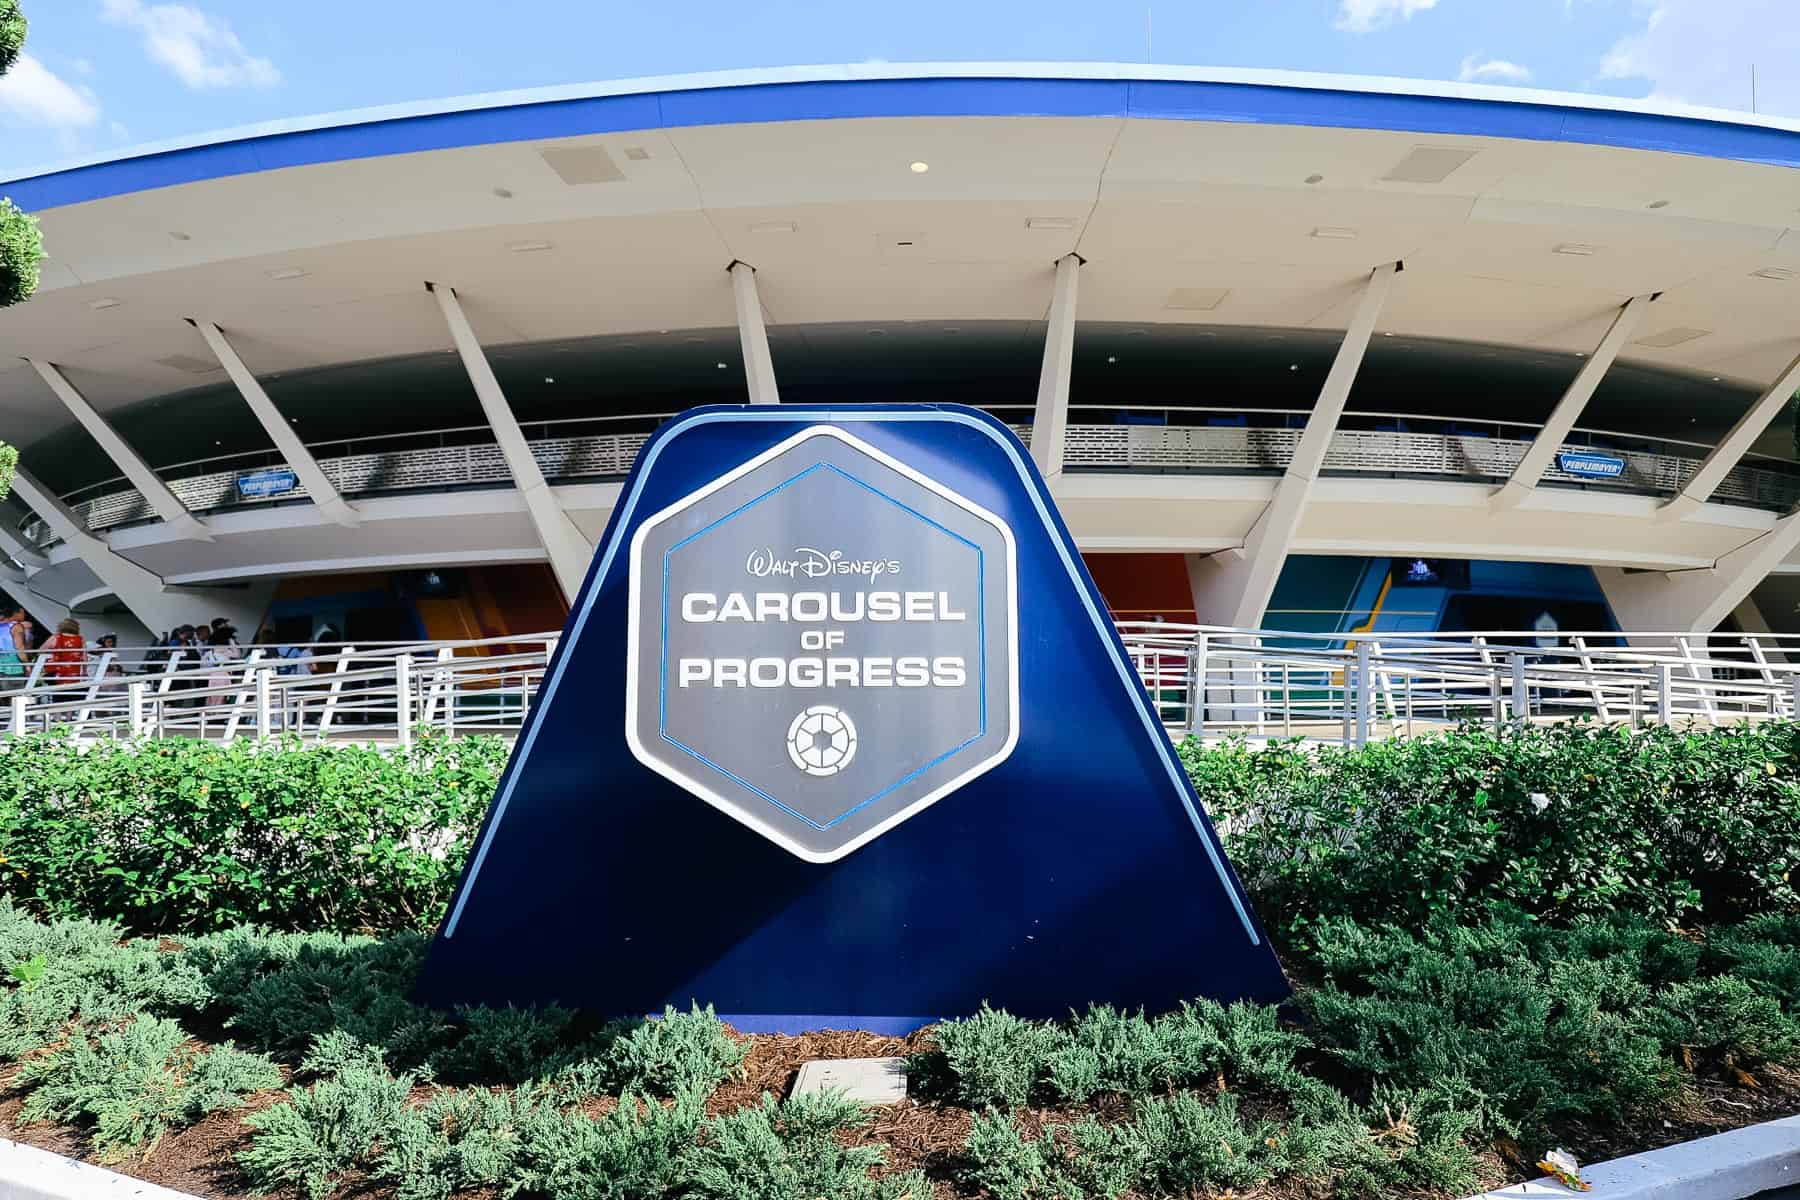 Walt Disney's Carousel of Progress attraction sign 